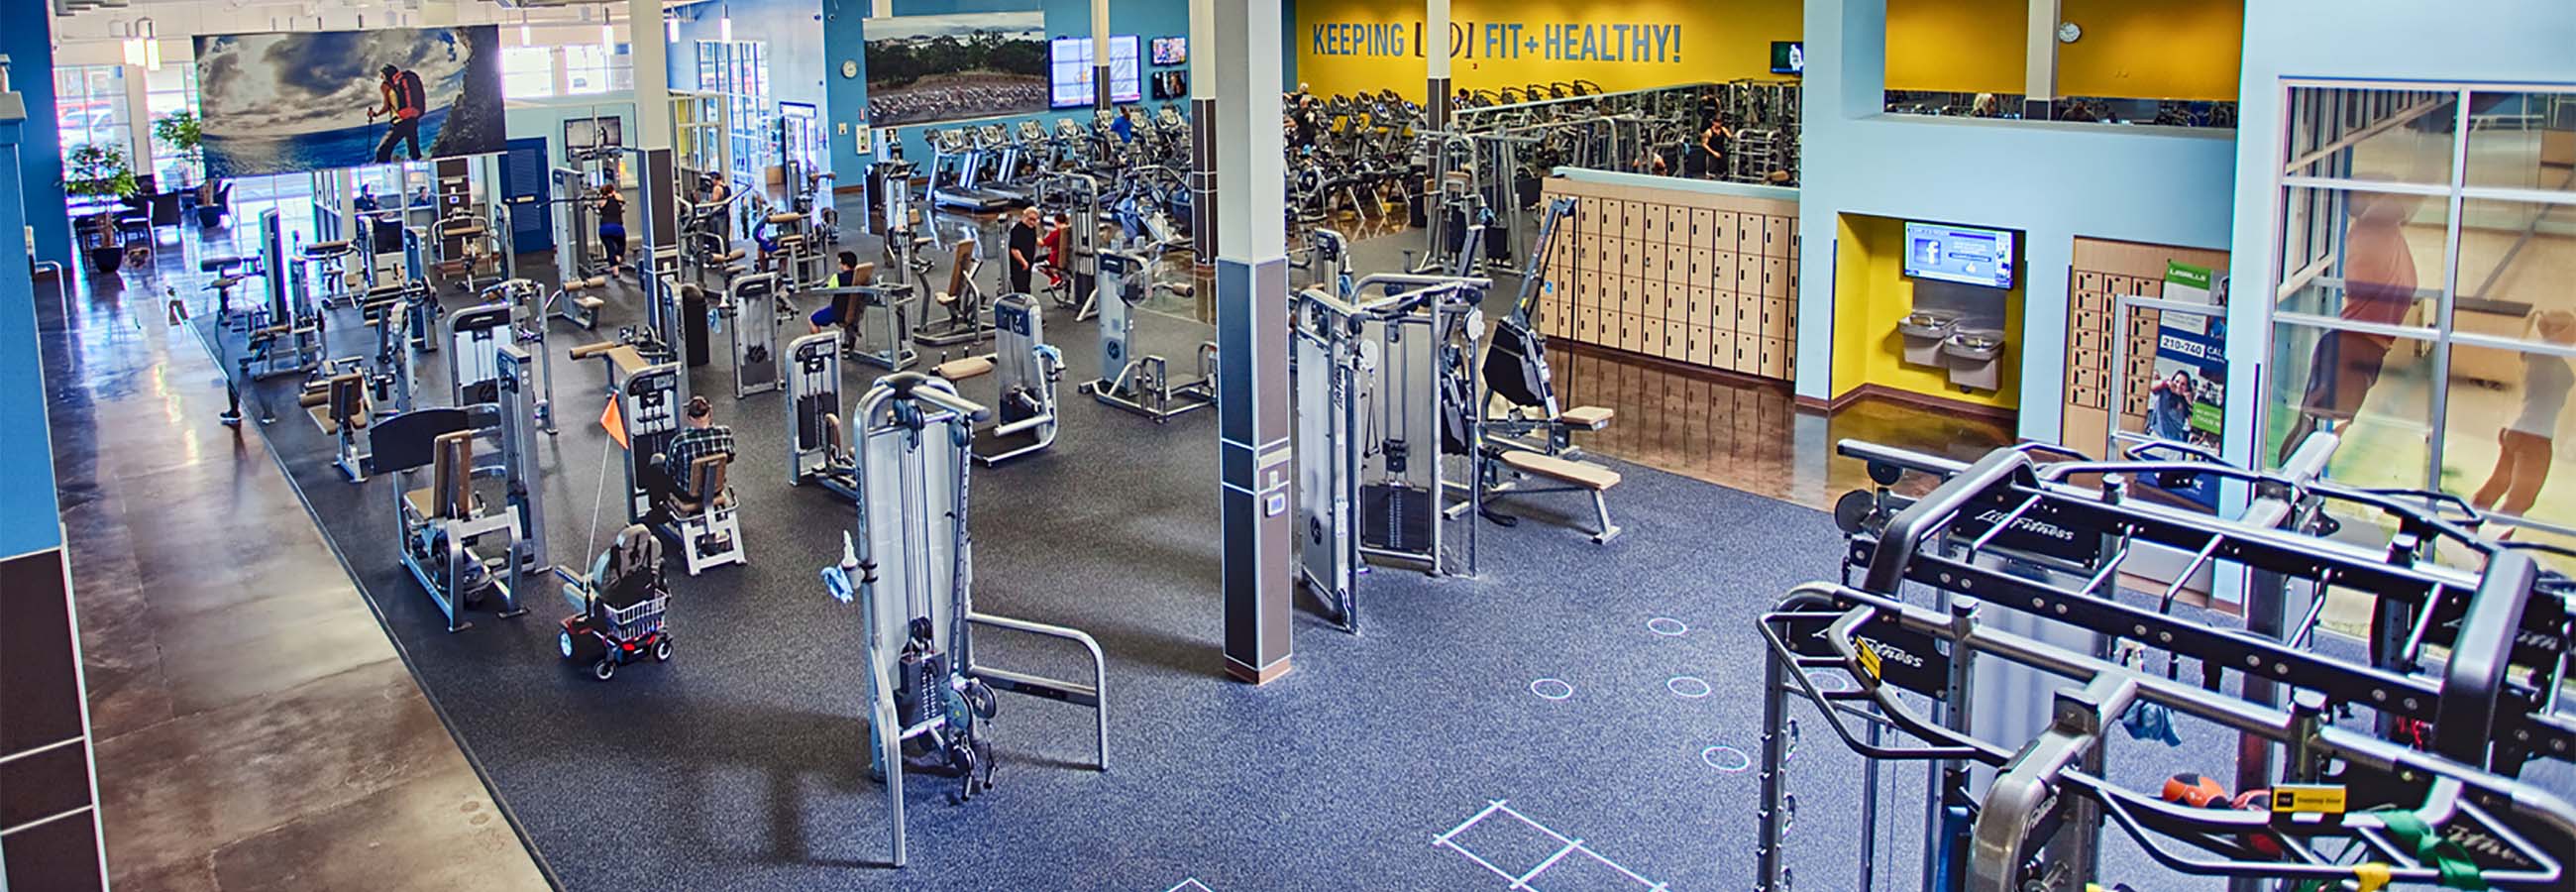 Gyms in Lodi, California 95242